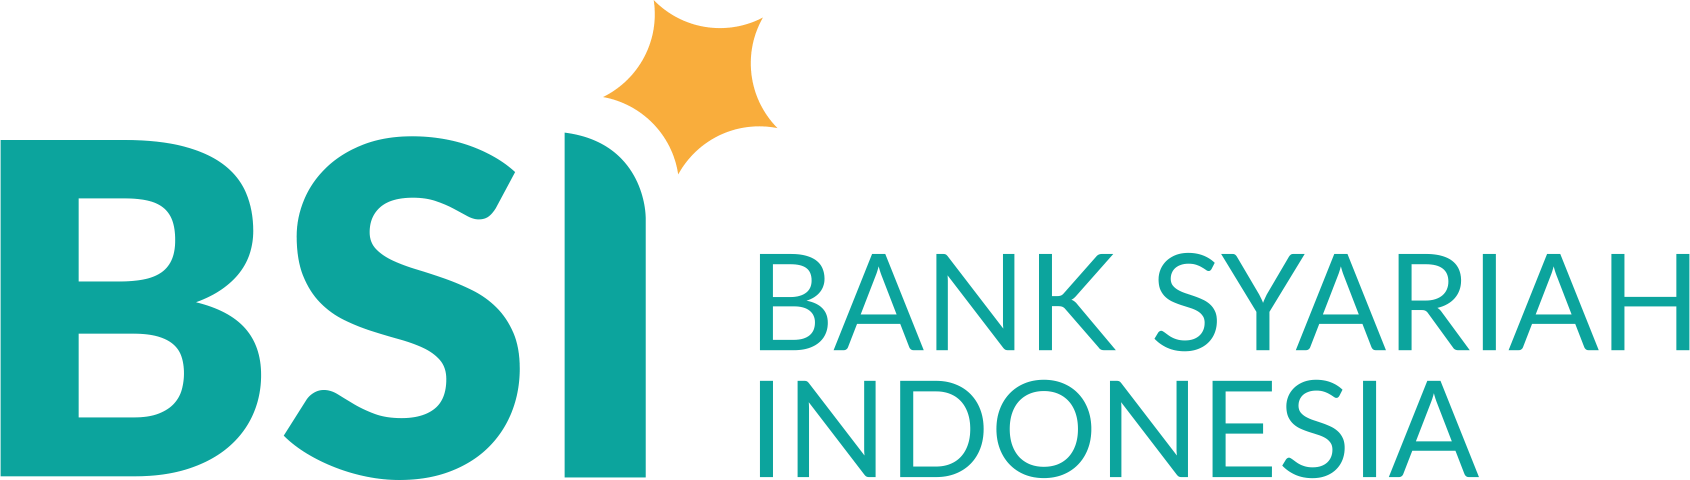 BSI (Bank Syariah Indonesia) Logo (PNG480p) - Vector69Com-2